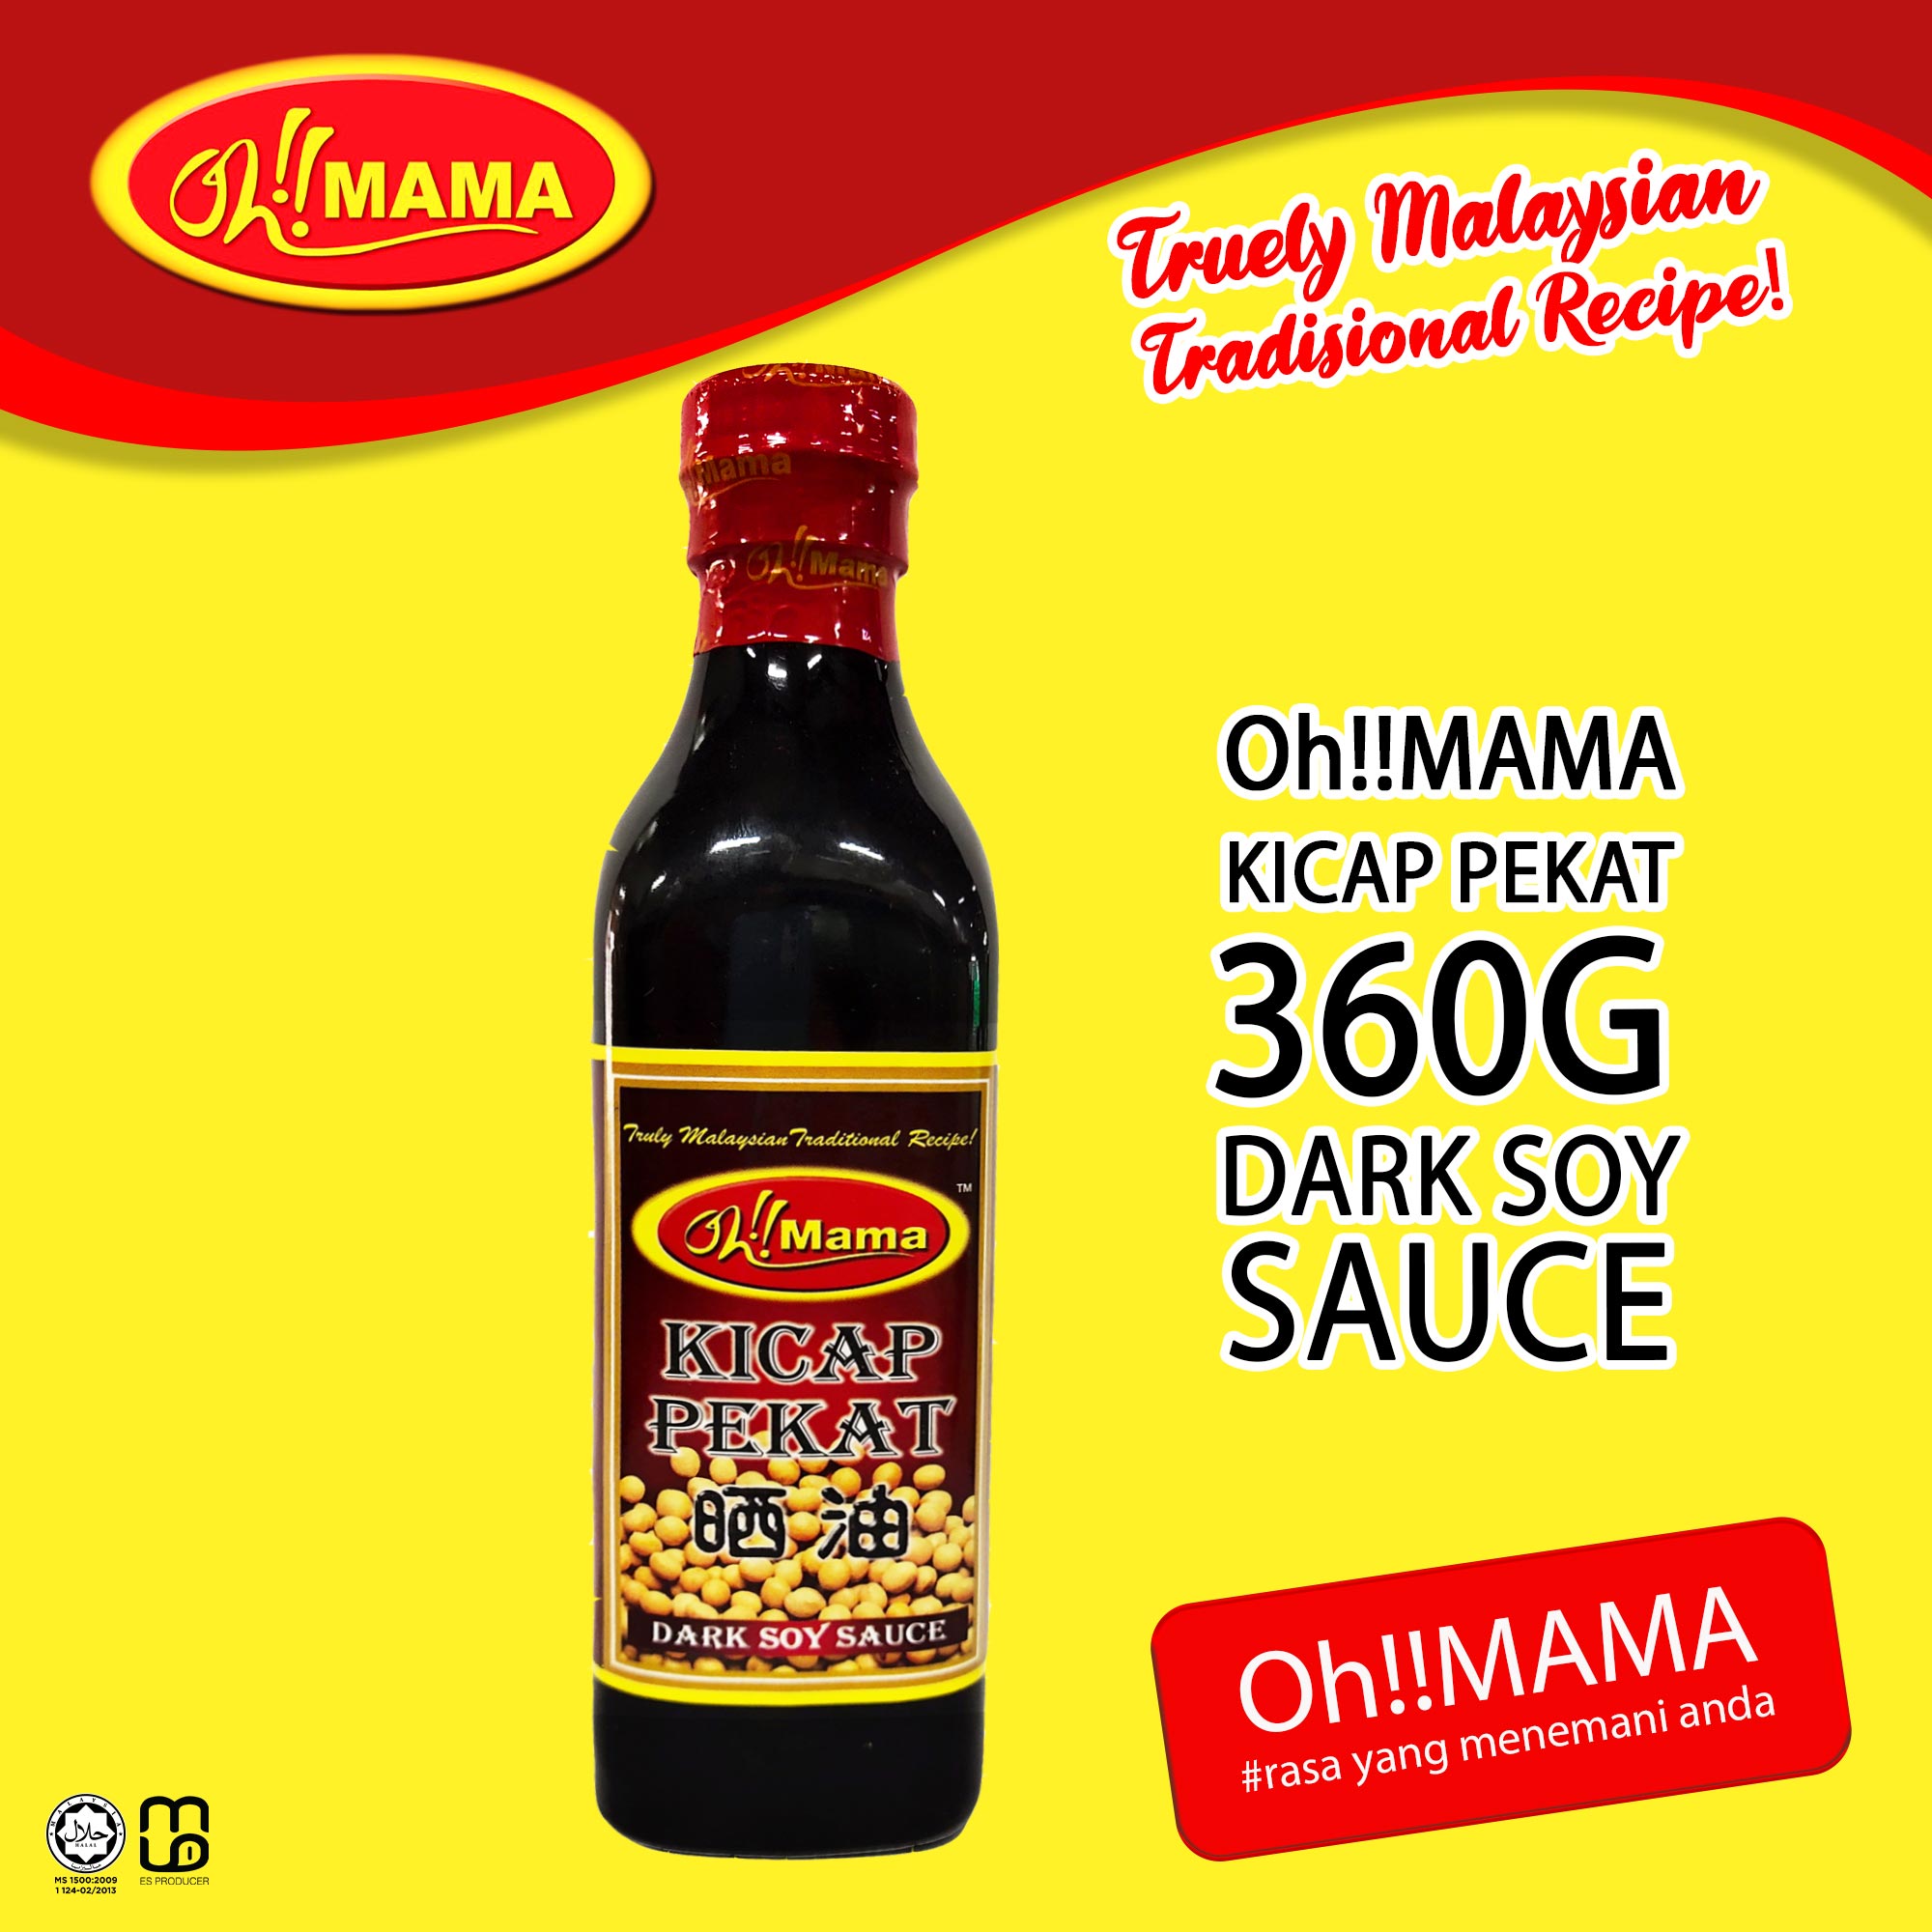 Oh!!MAMA Dark Soy Sauce/ Kicap Pekat 360g